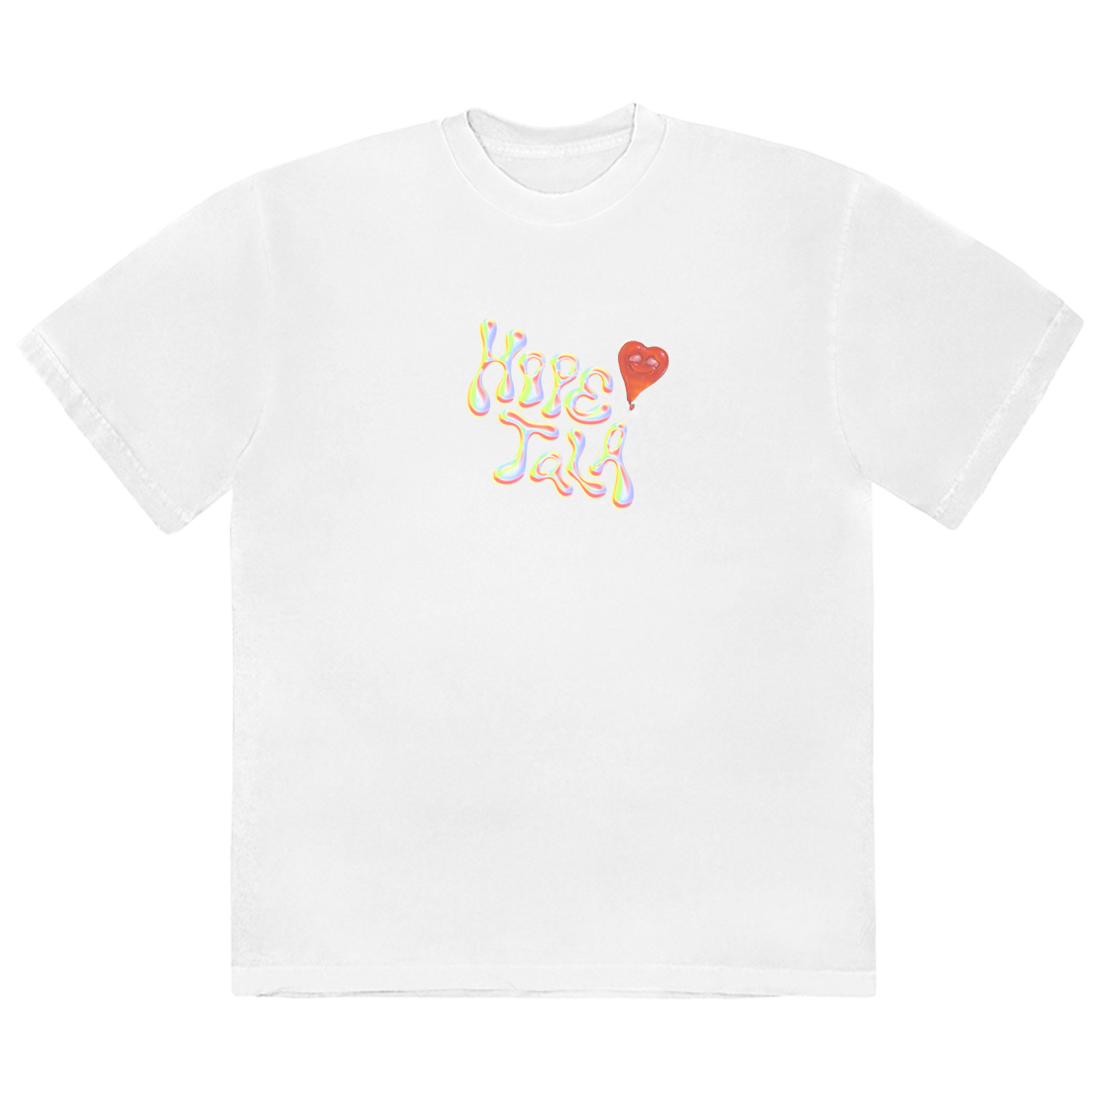 Hope Tala - White Hope Tala Graphic Print T-shirt